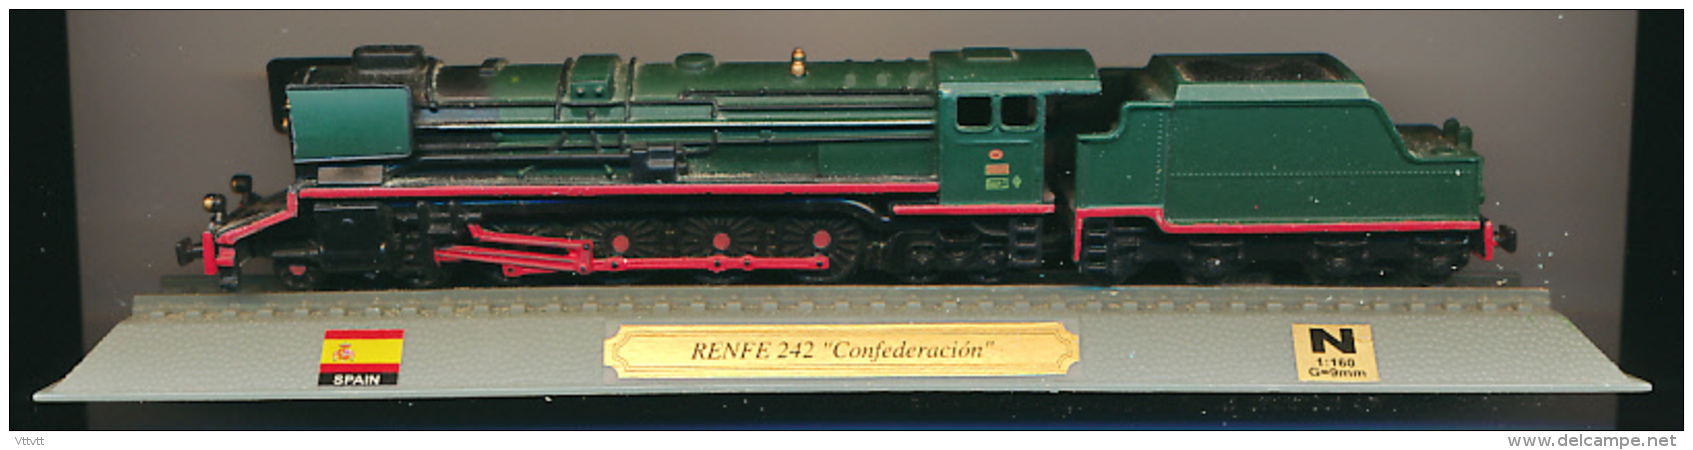 Locomotive : Renfe 242 "Confederacion", Echelle N 1/160, G = 9 Mm, Spain Espagne - Locomotive